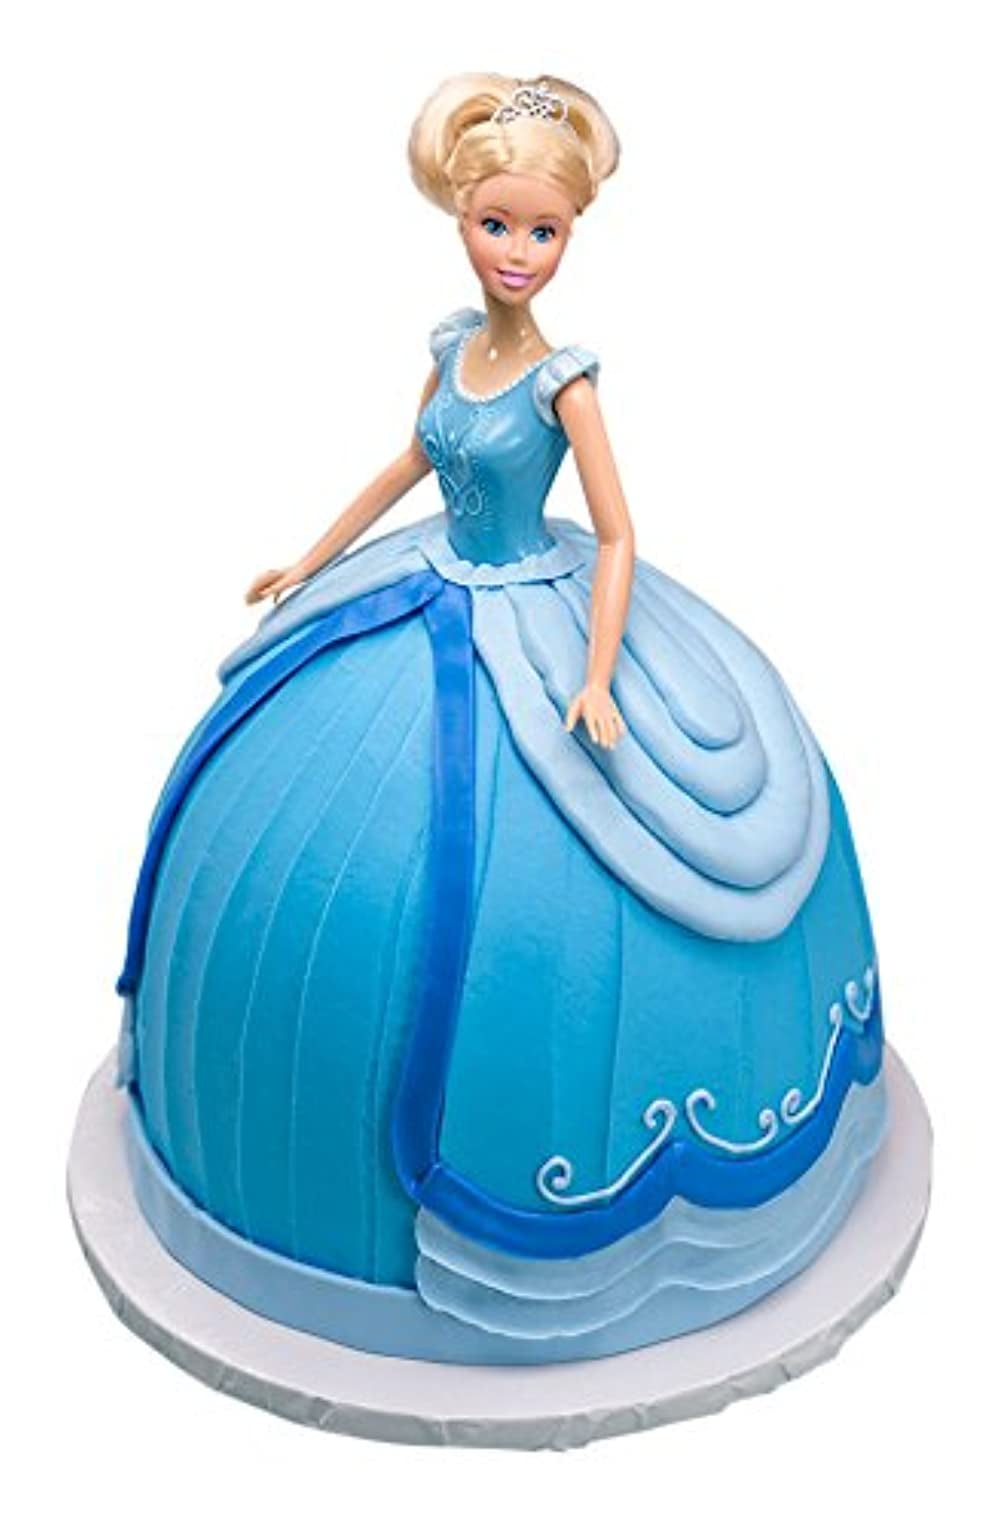 Cinderella doll cake - Decorated Cake by m1bame - CakesDecor